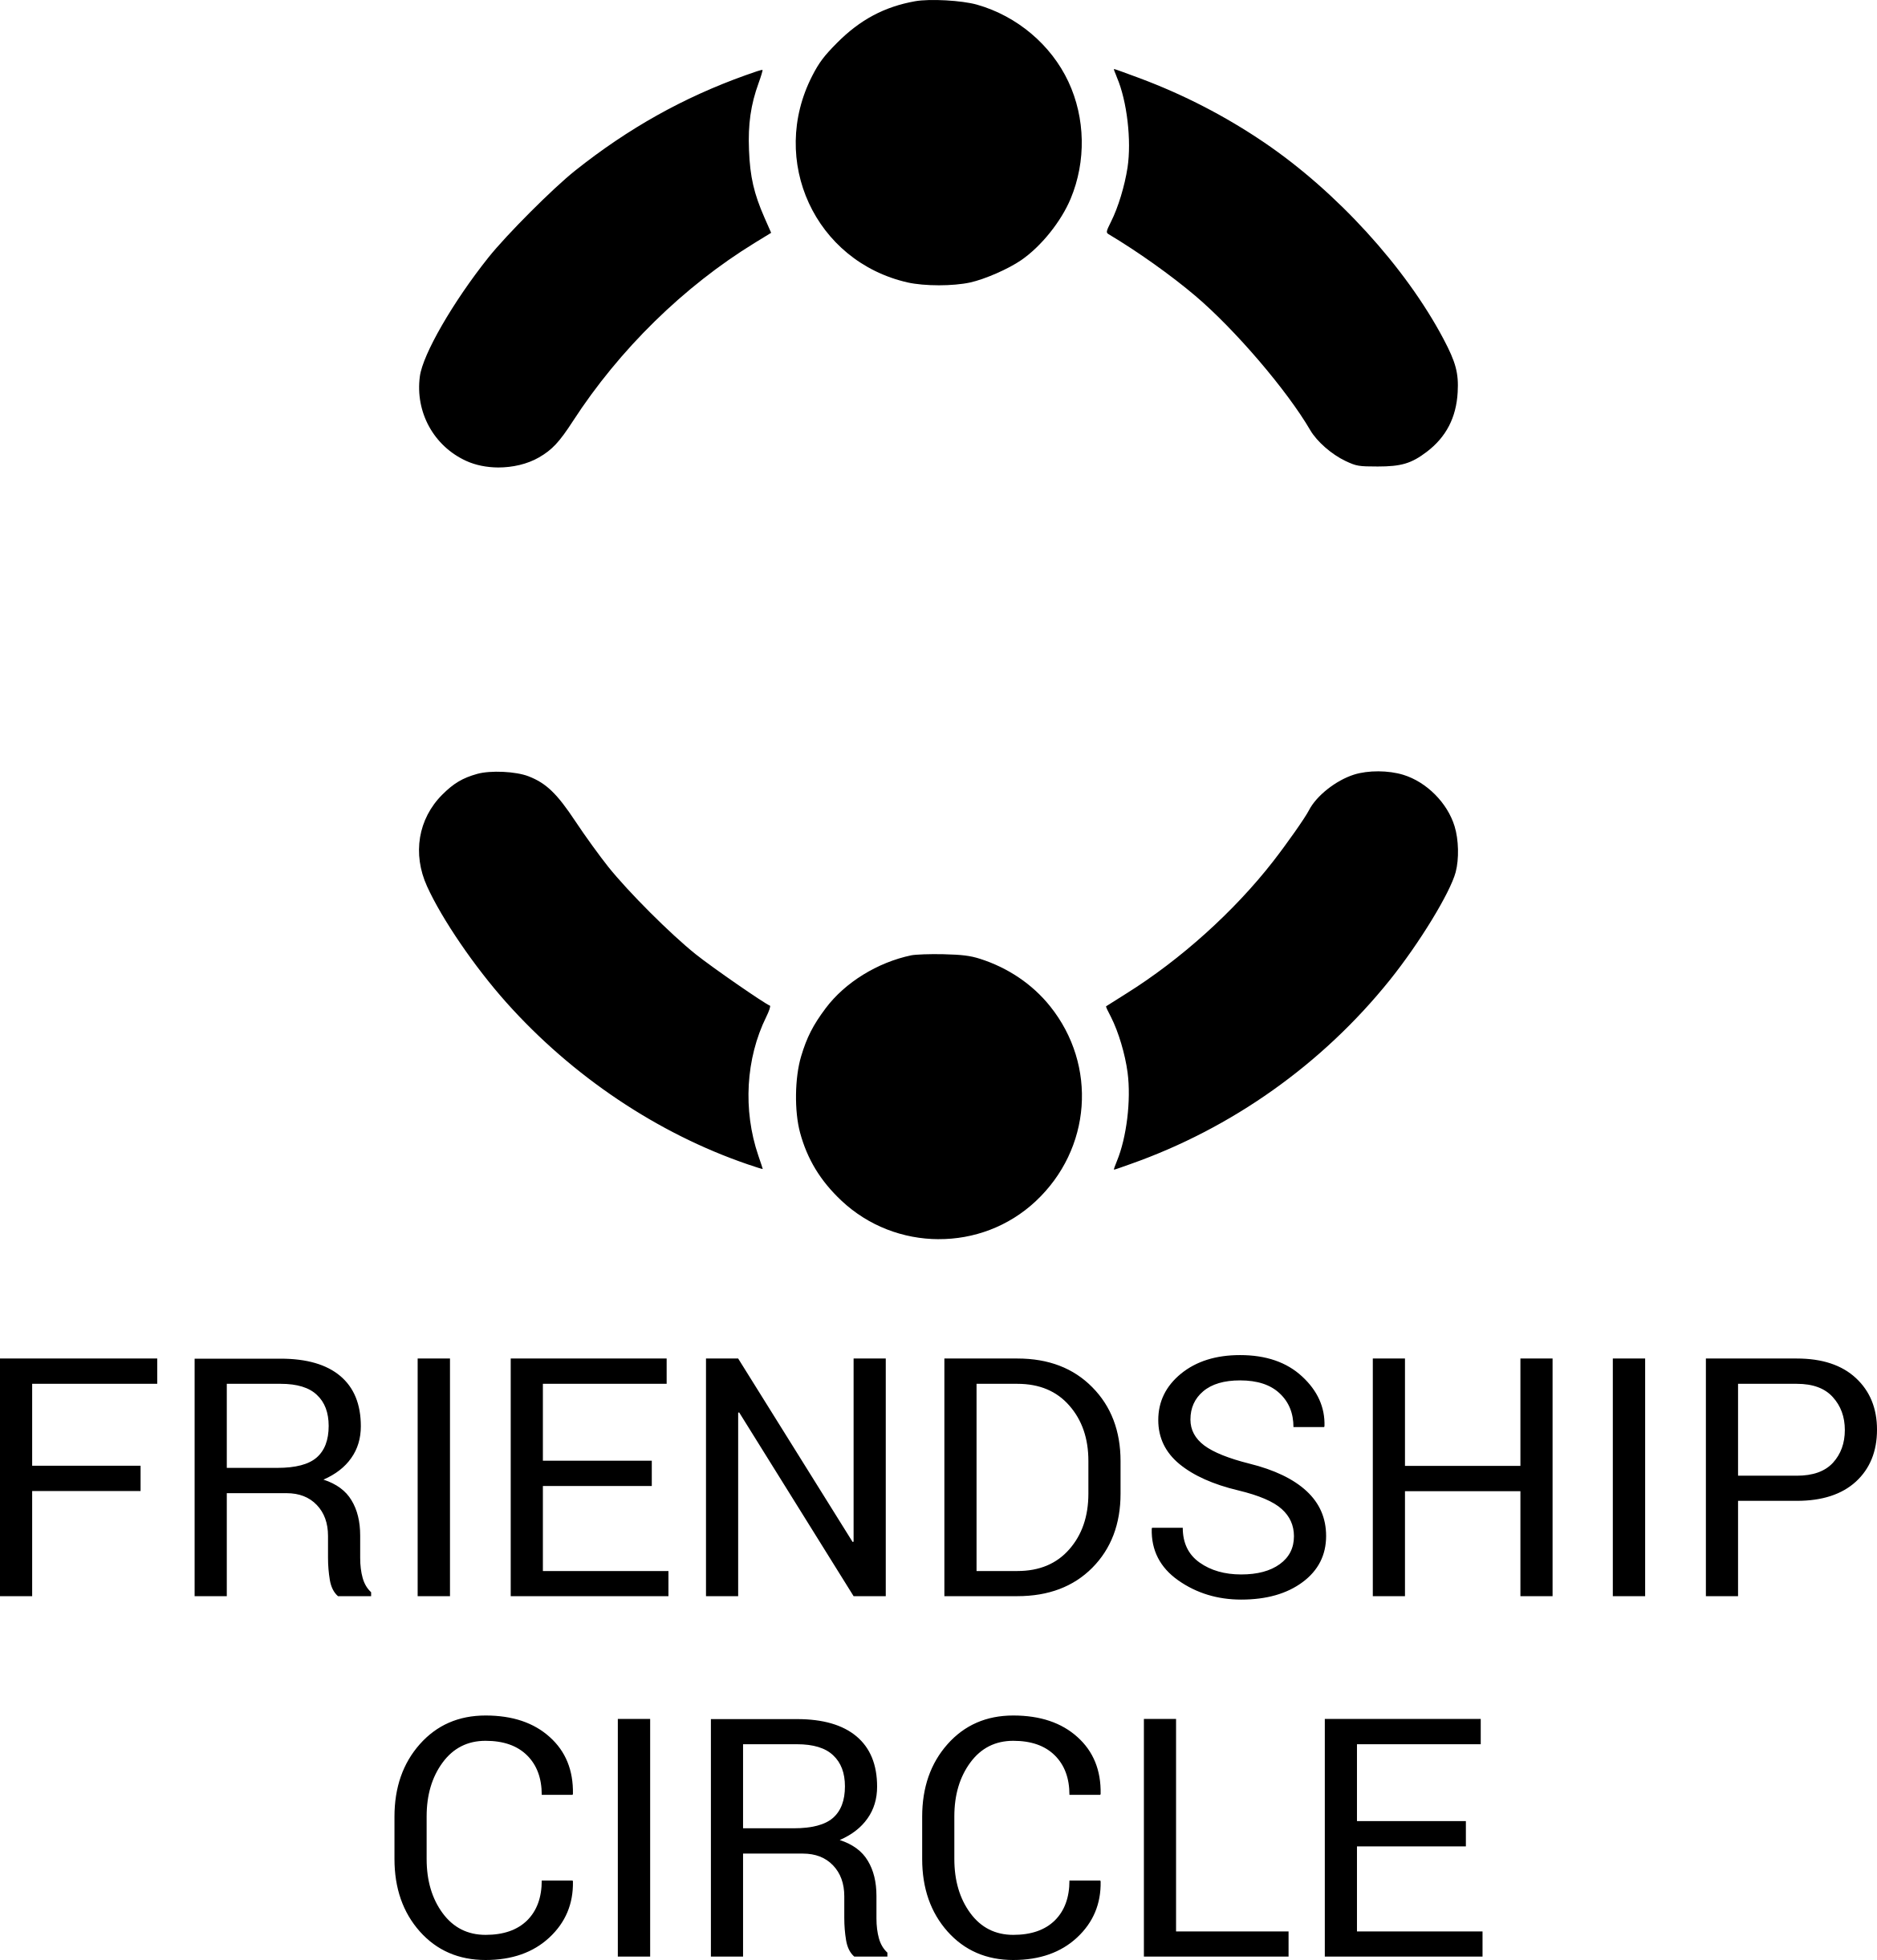 In a Circle with a Black B Logo - Logos | Friendship Circle